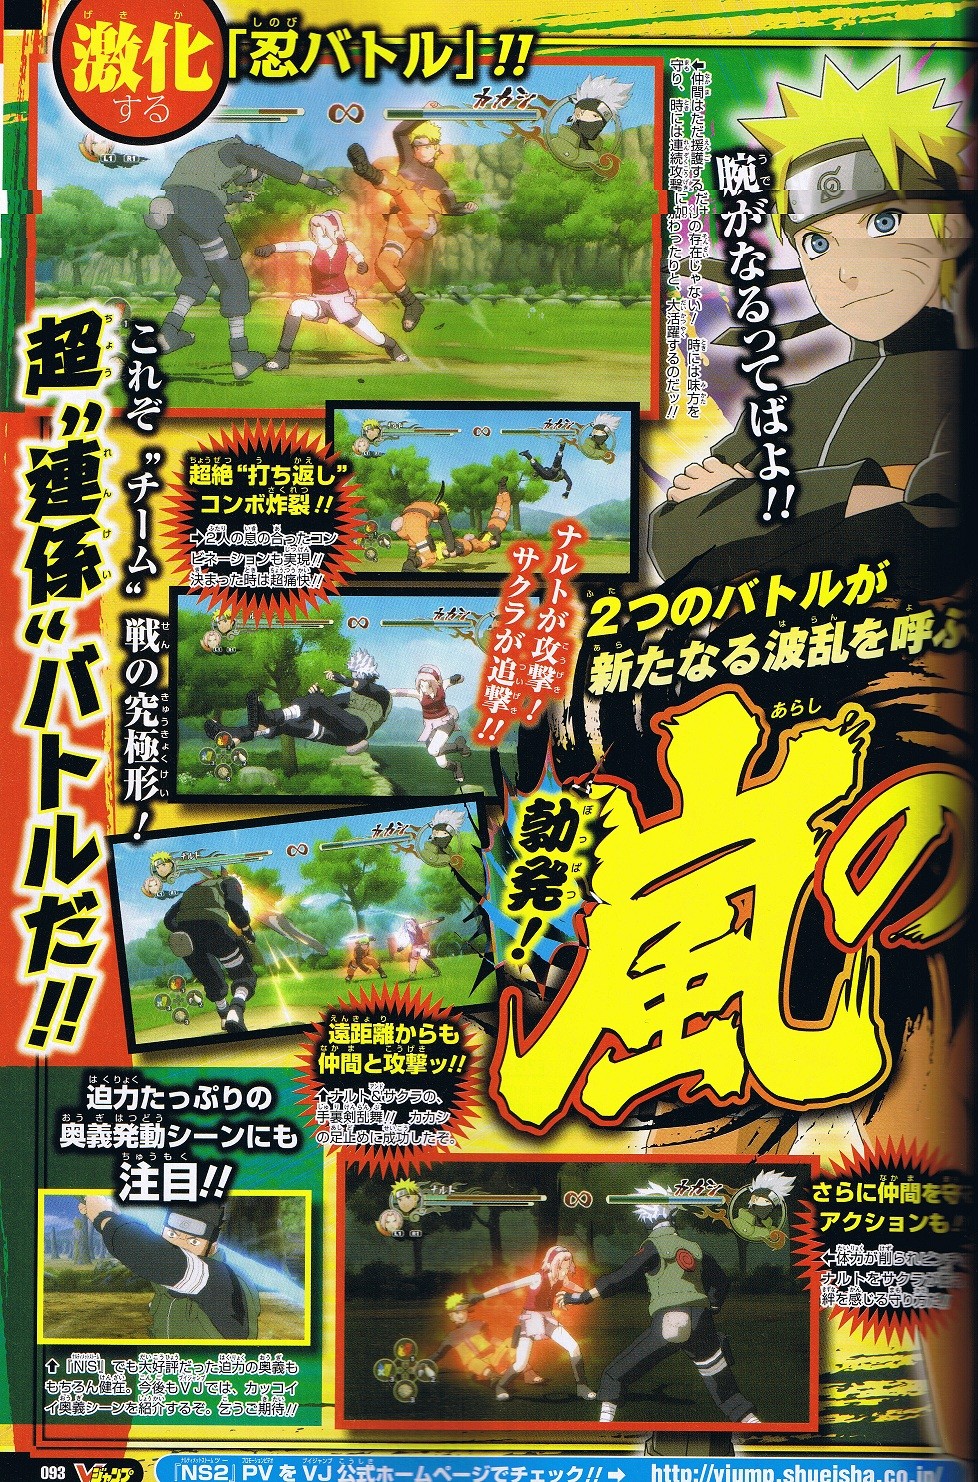 Naruto Shippuden Ultimate Ninja Storm 2 scan v jump